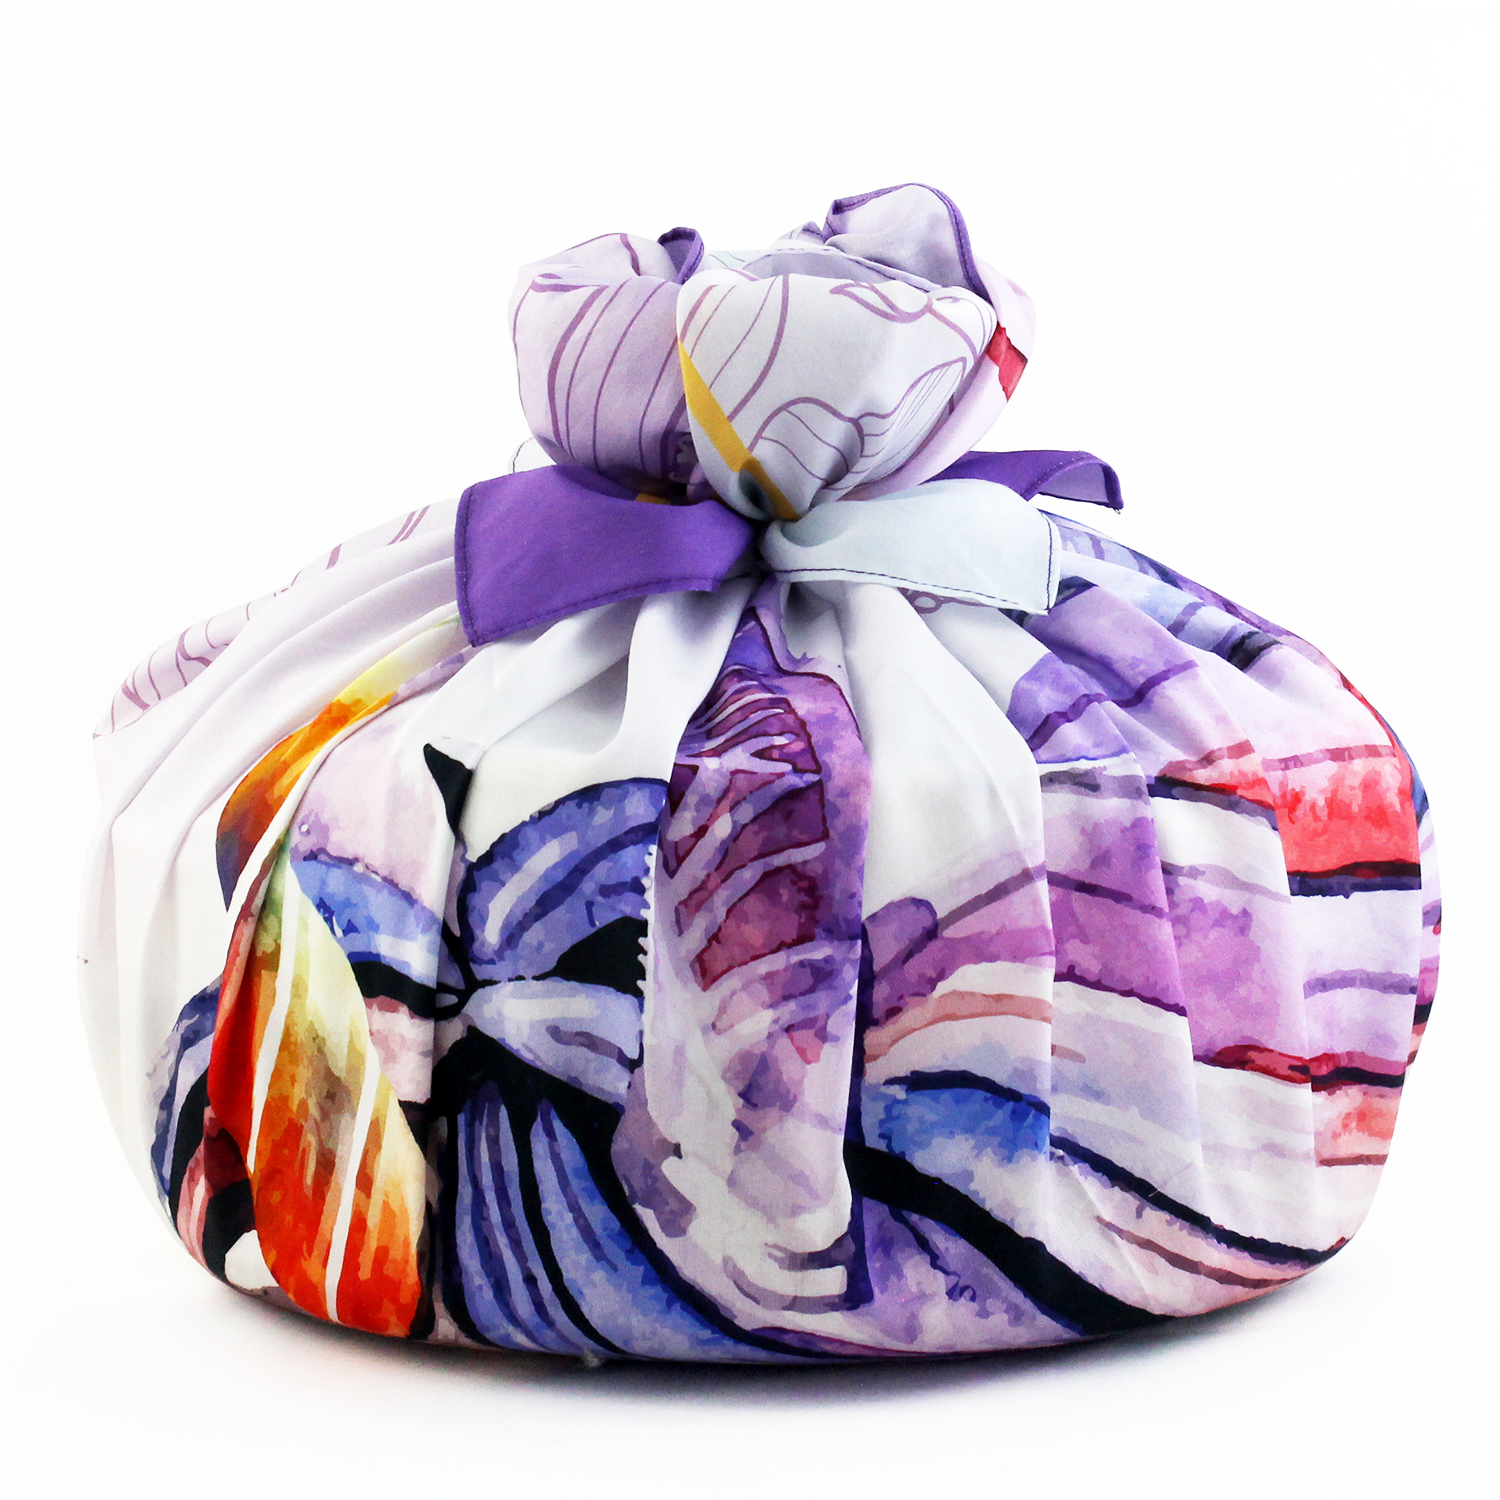 Baby Girl Gift Basket - Furoshiki Wrapping